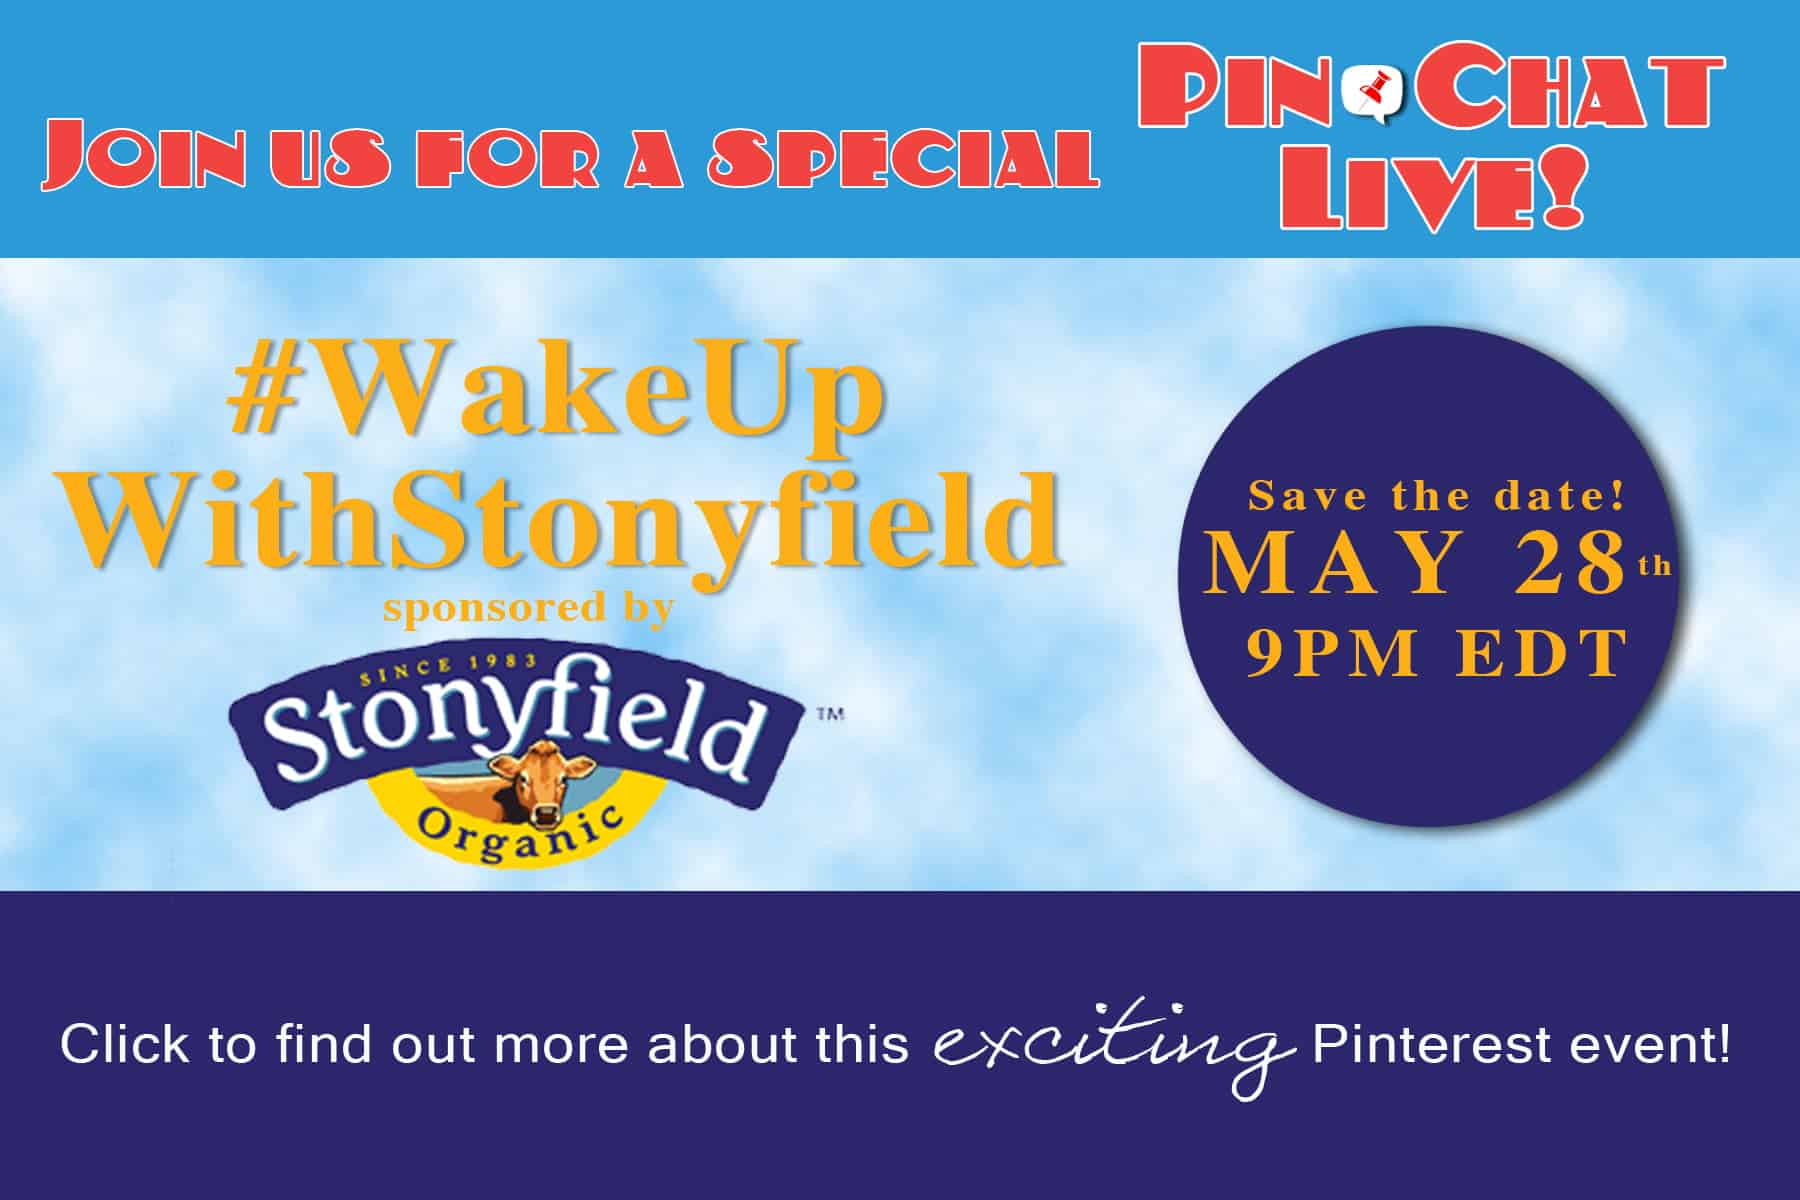 you’re invited! #wakeupwithstonyfield pinchatlive